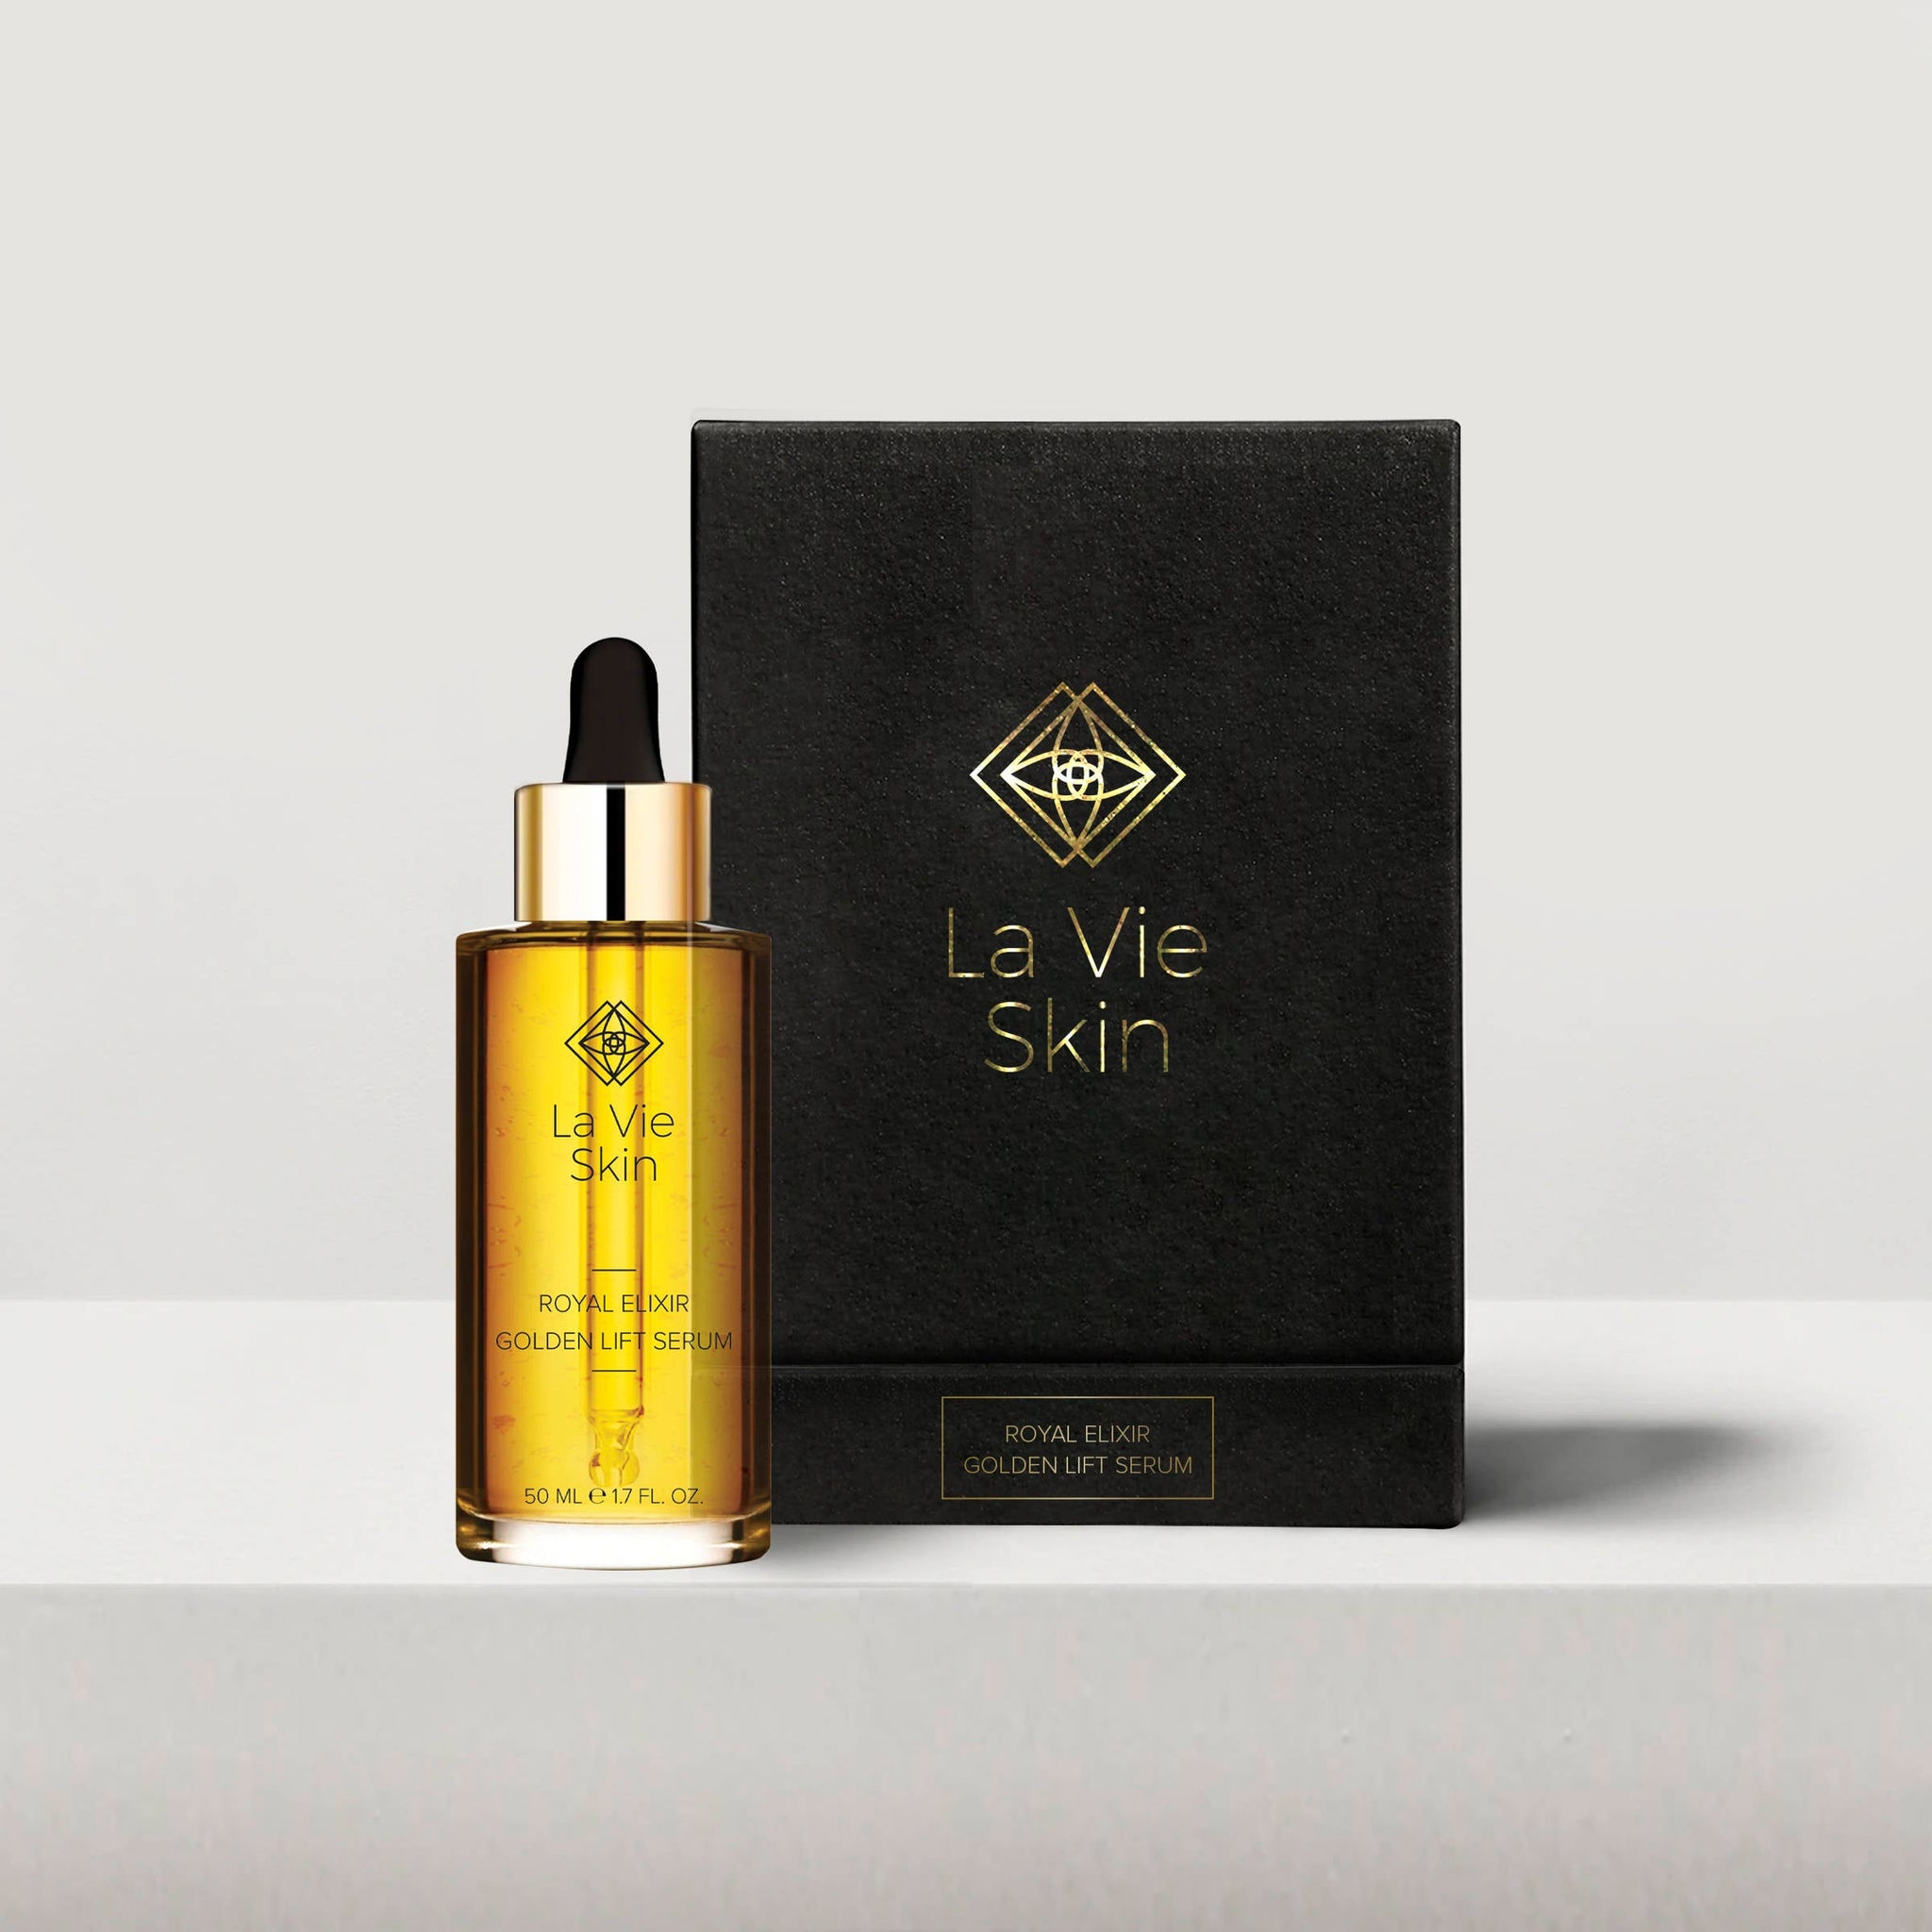 Royal Elixir Golden Lift Serum from La Vie Skin